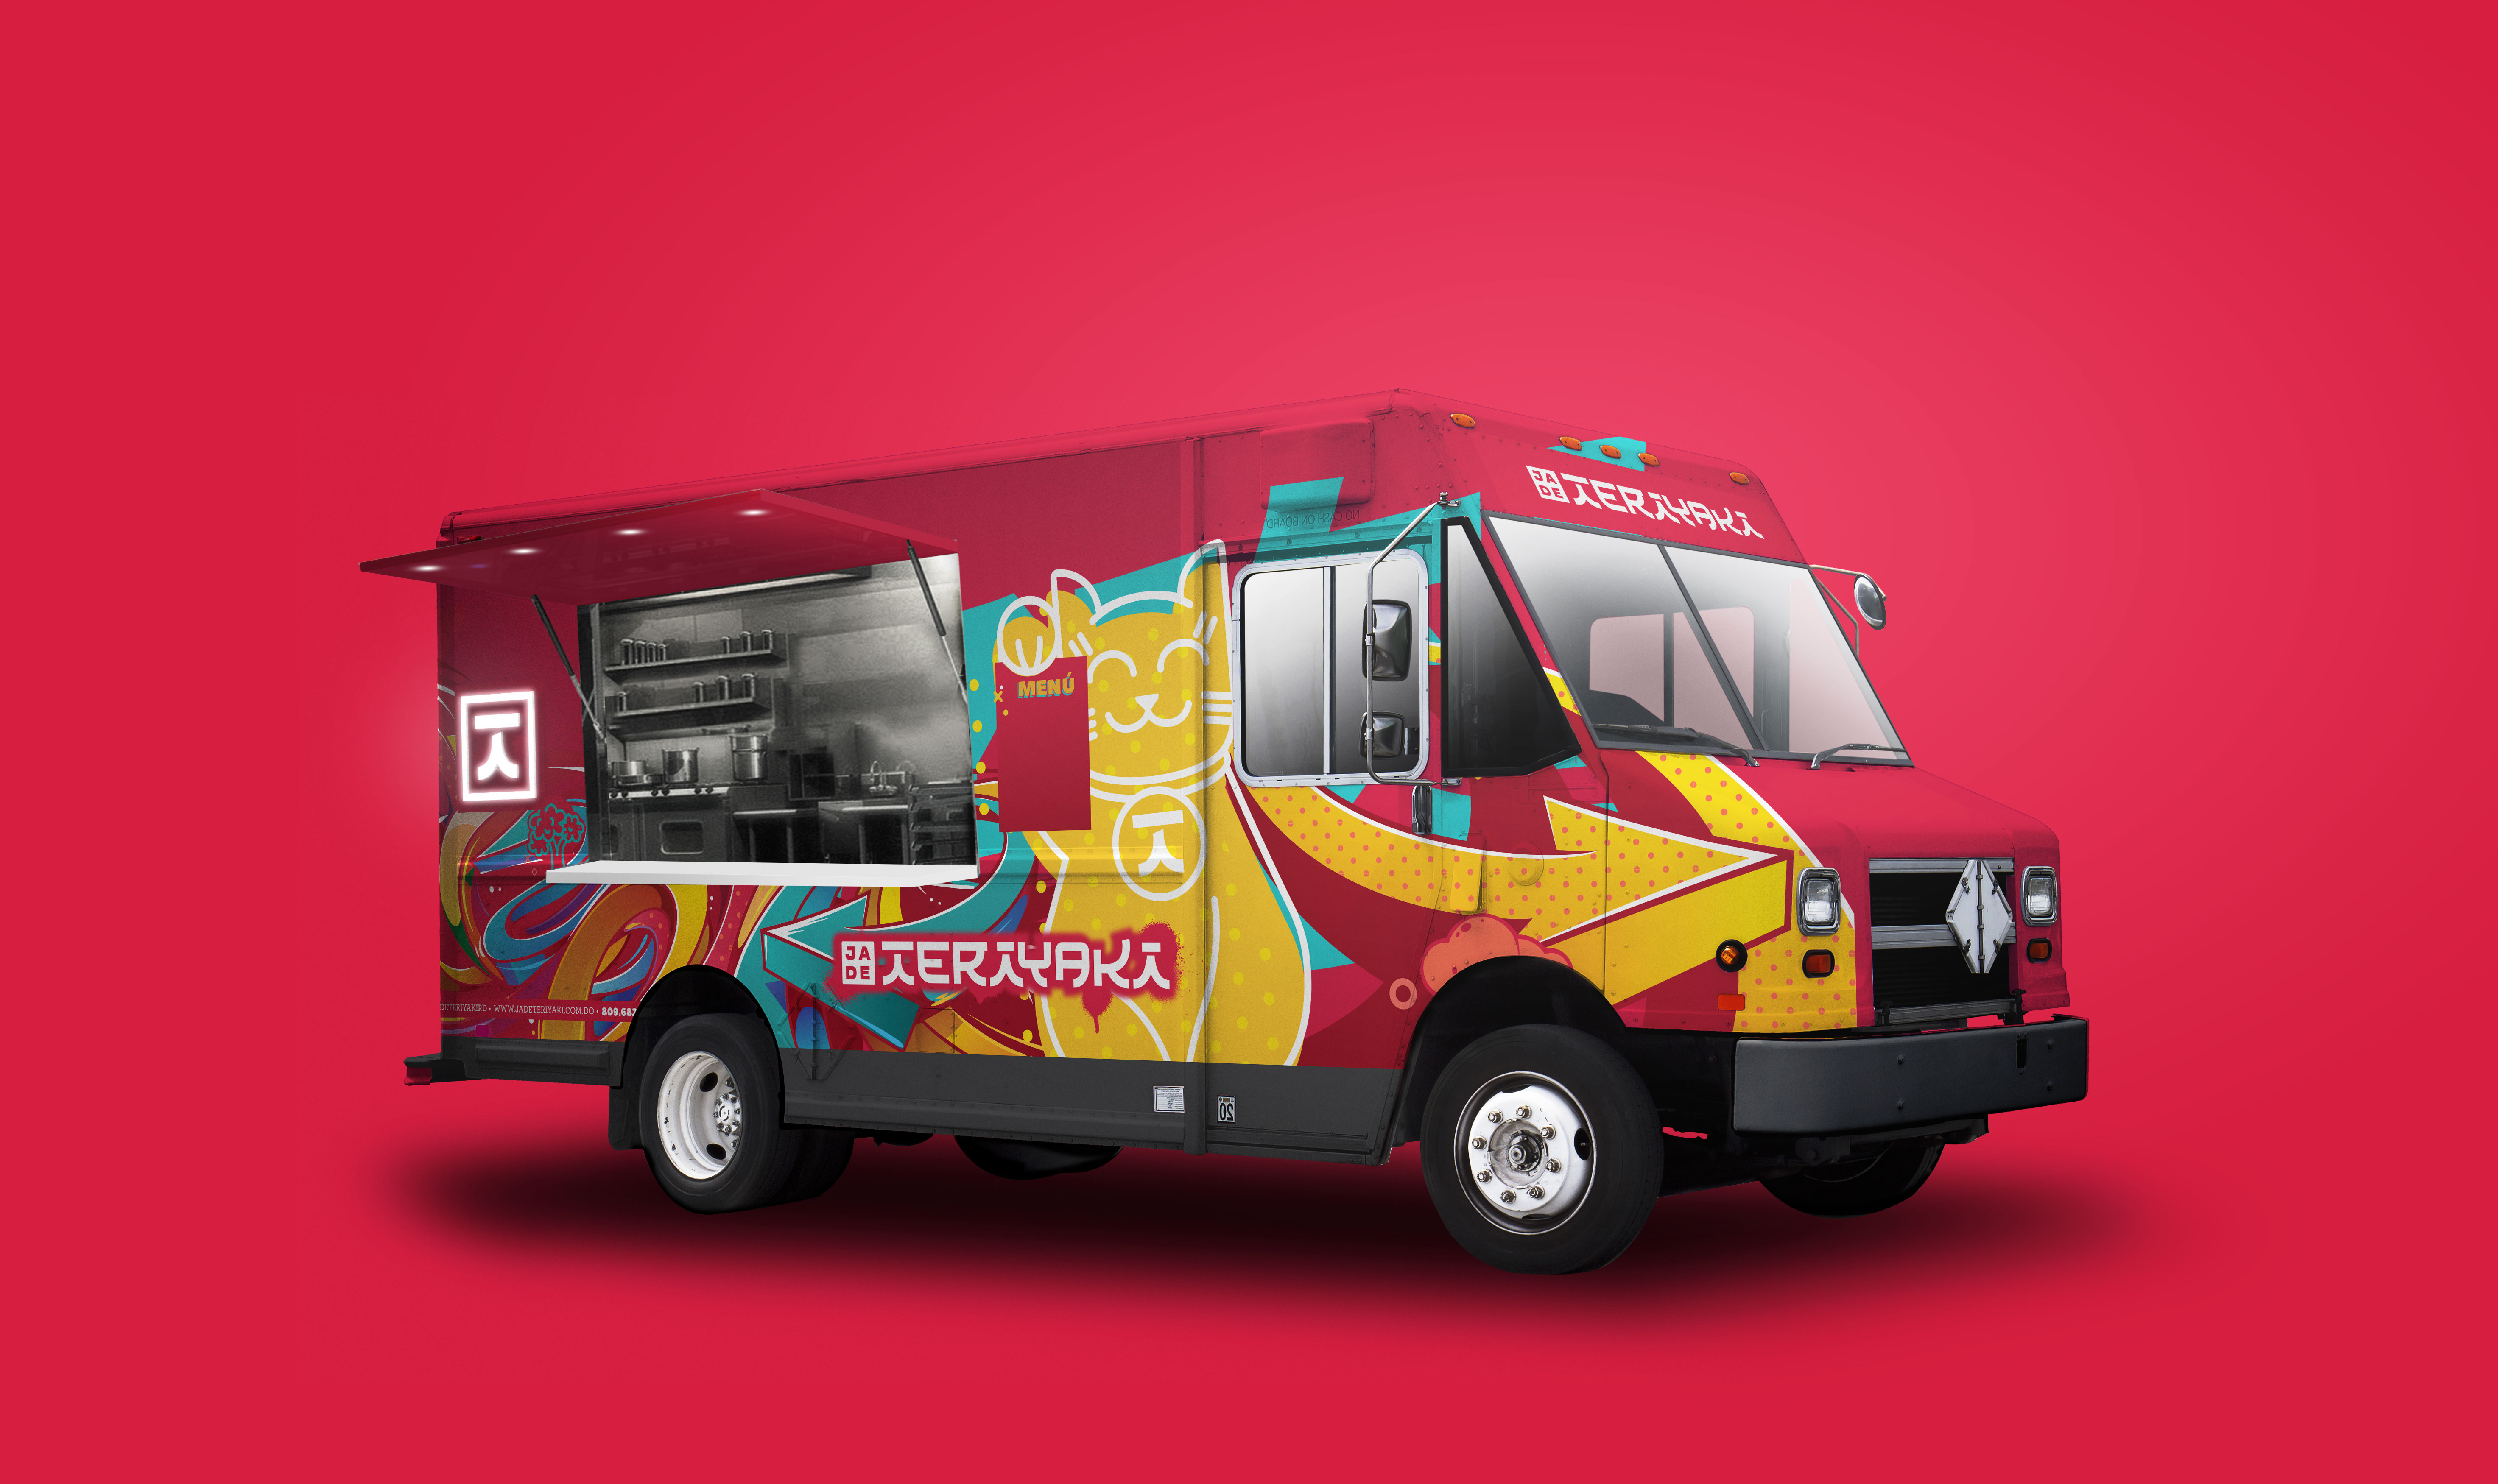 fellowmarks jade teriyaki rebranding branded food truck